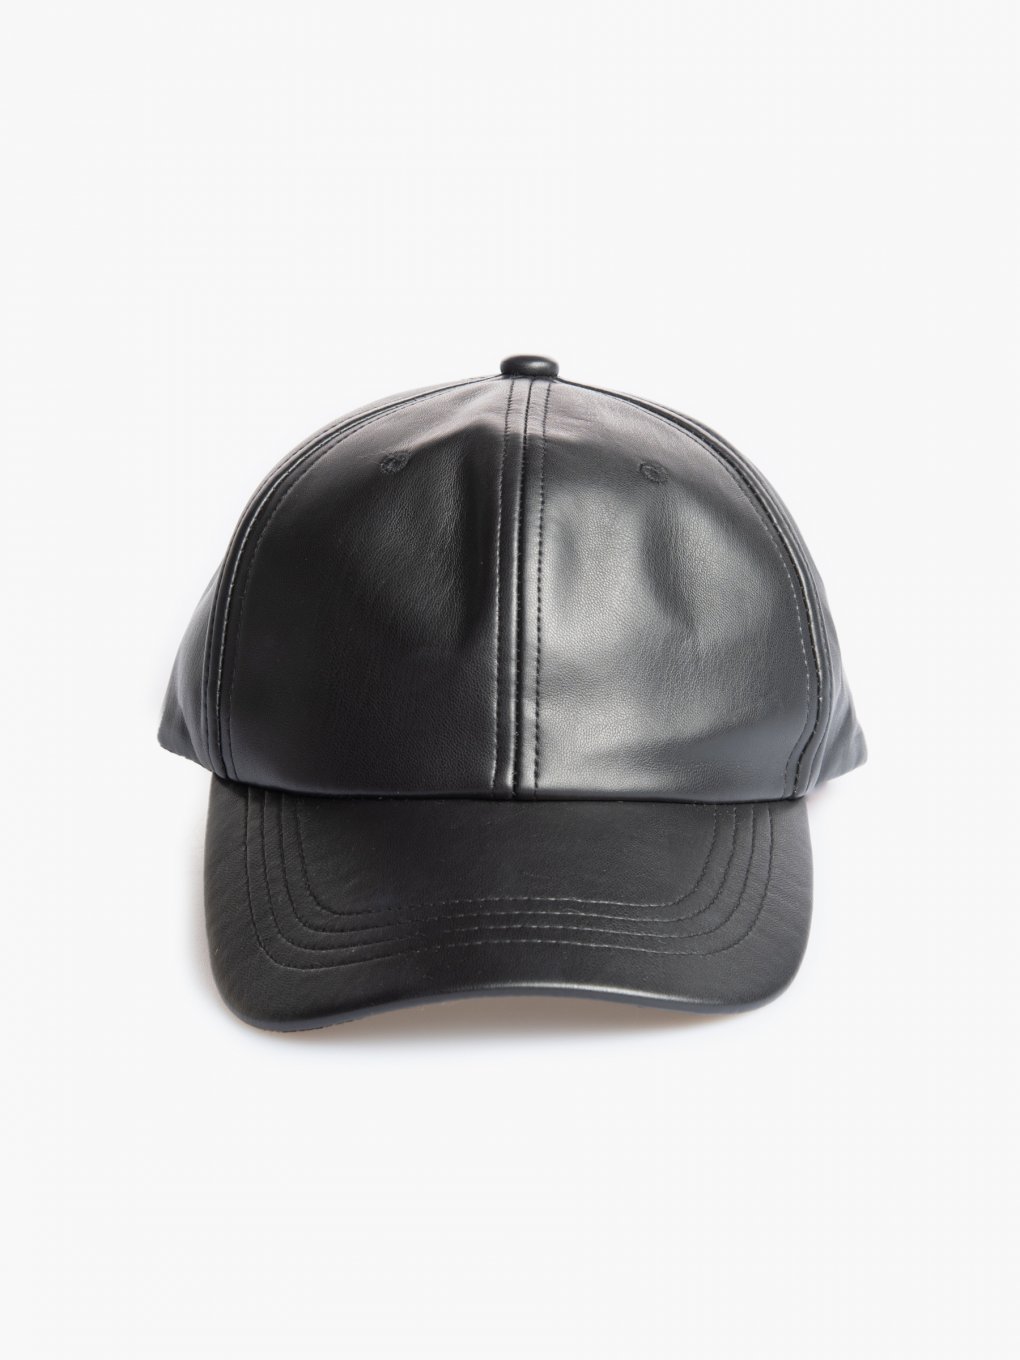 Faux leather baseball cap